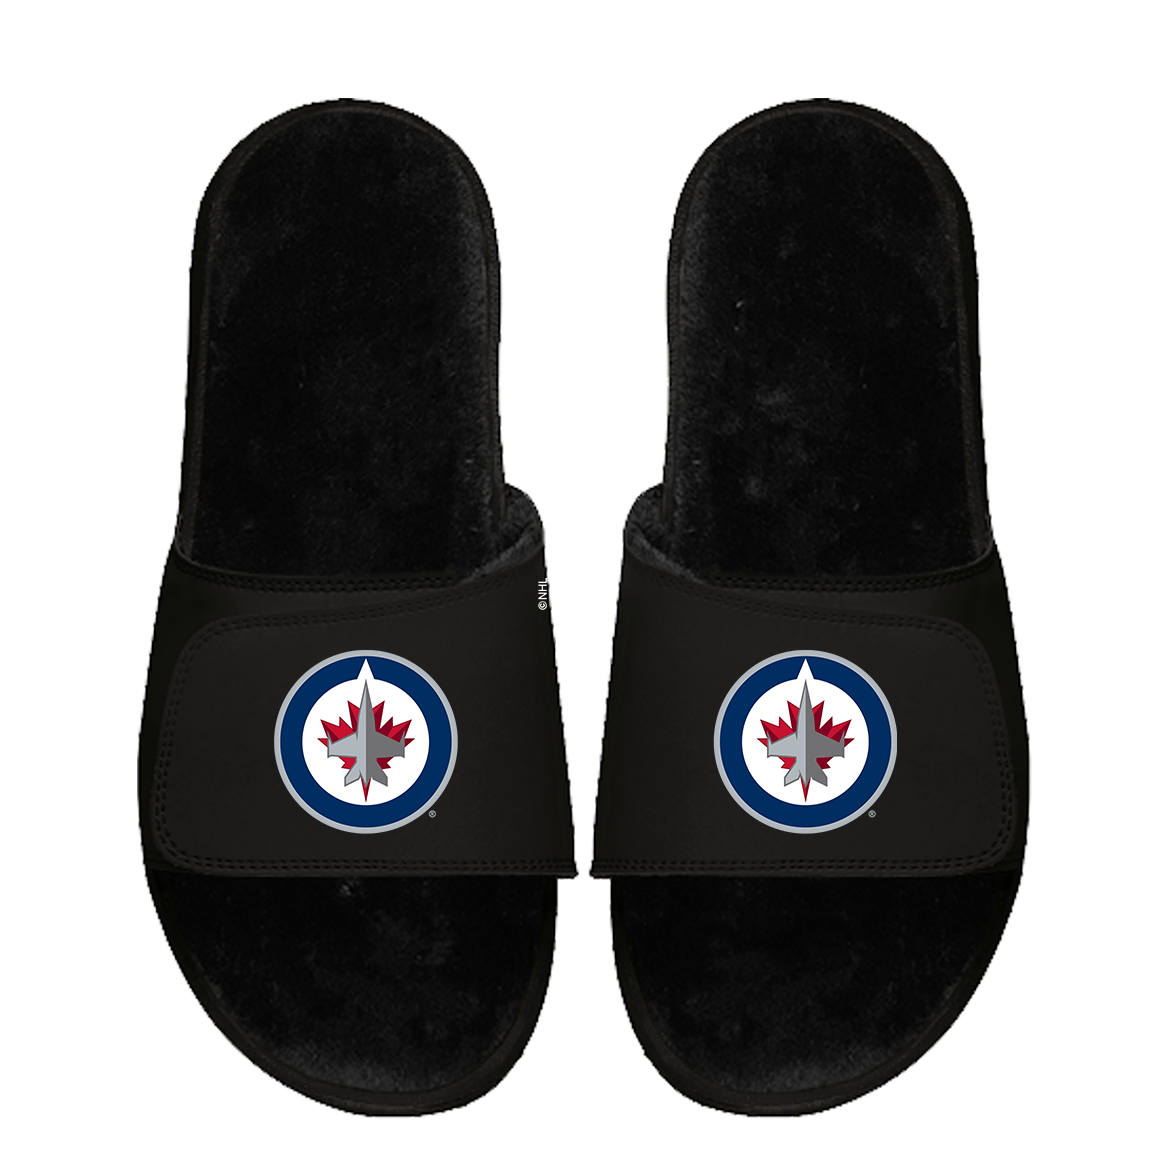 Winnipeg Jets Primary Black Fur